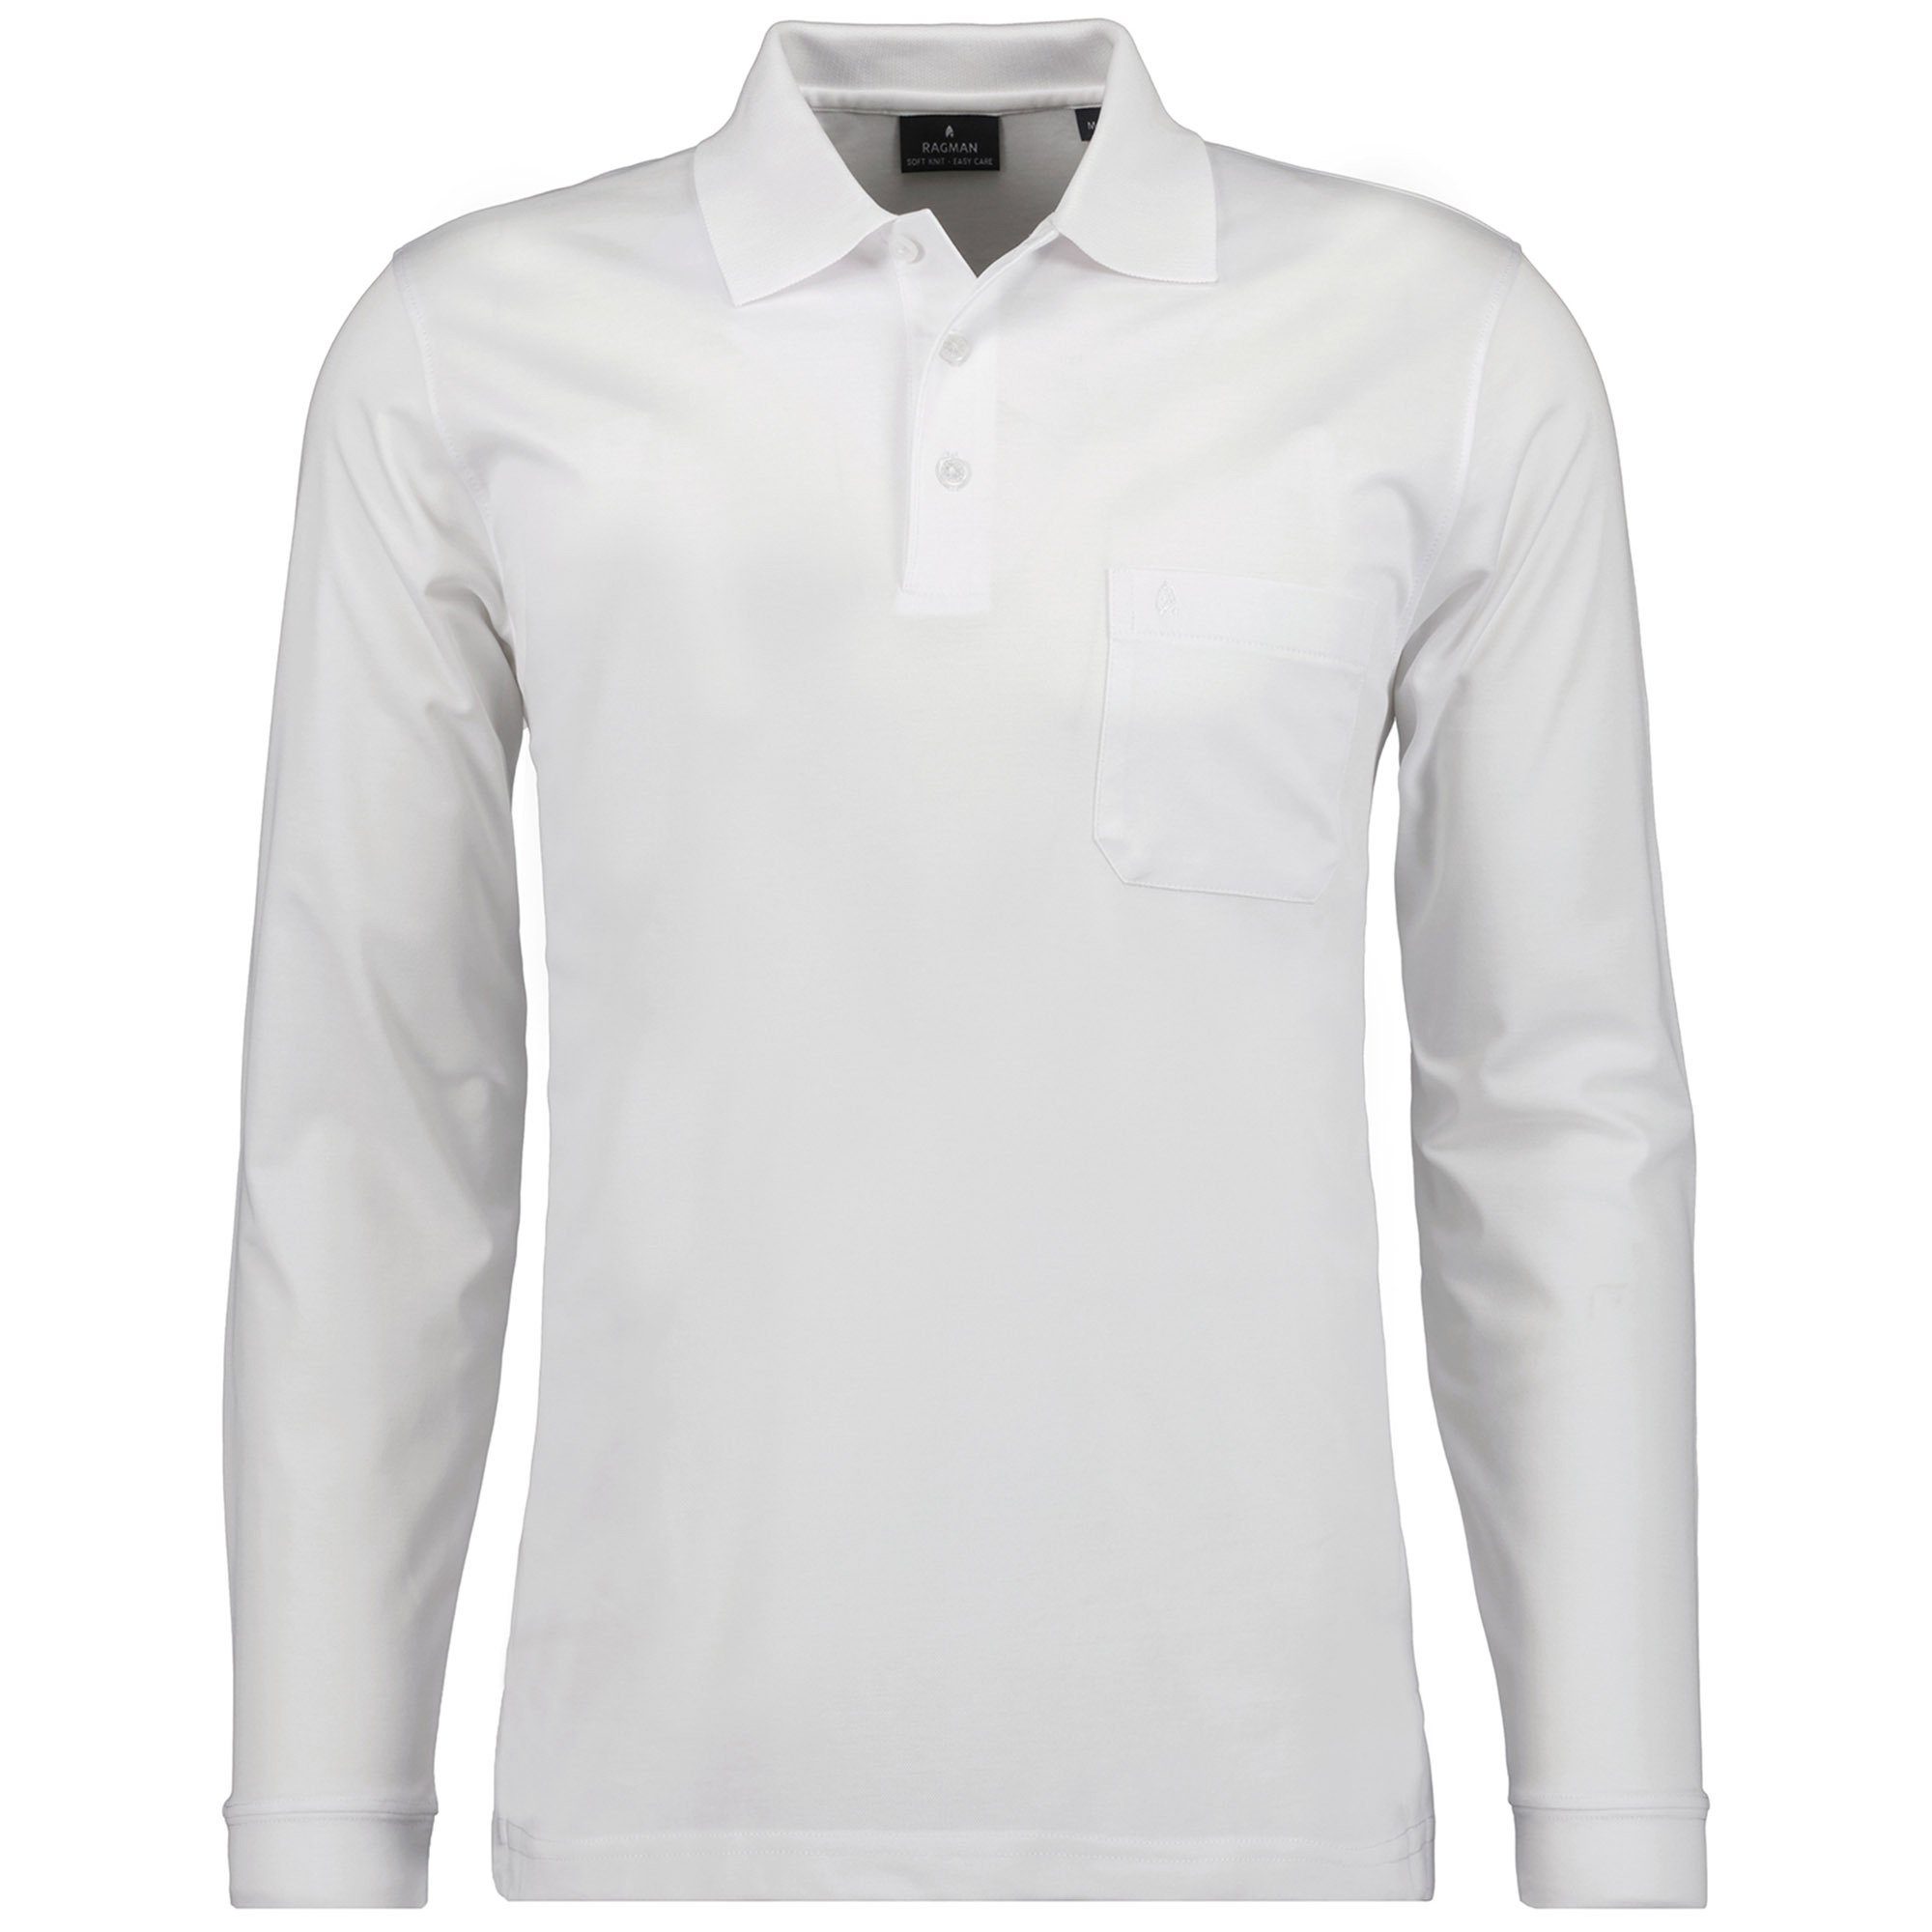 RAGMAN Poloshirt Herren Langarm-Poloshirt - Soft Knit Polo Knopf Weiß